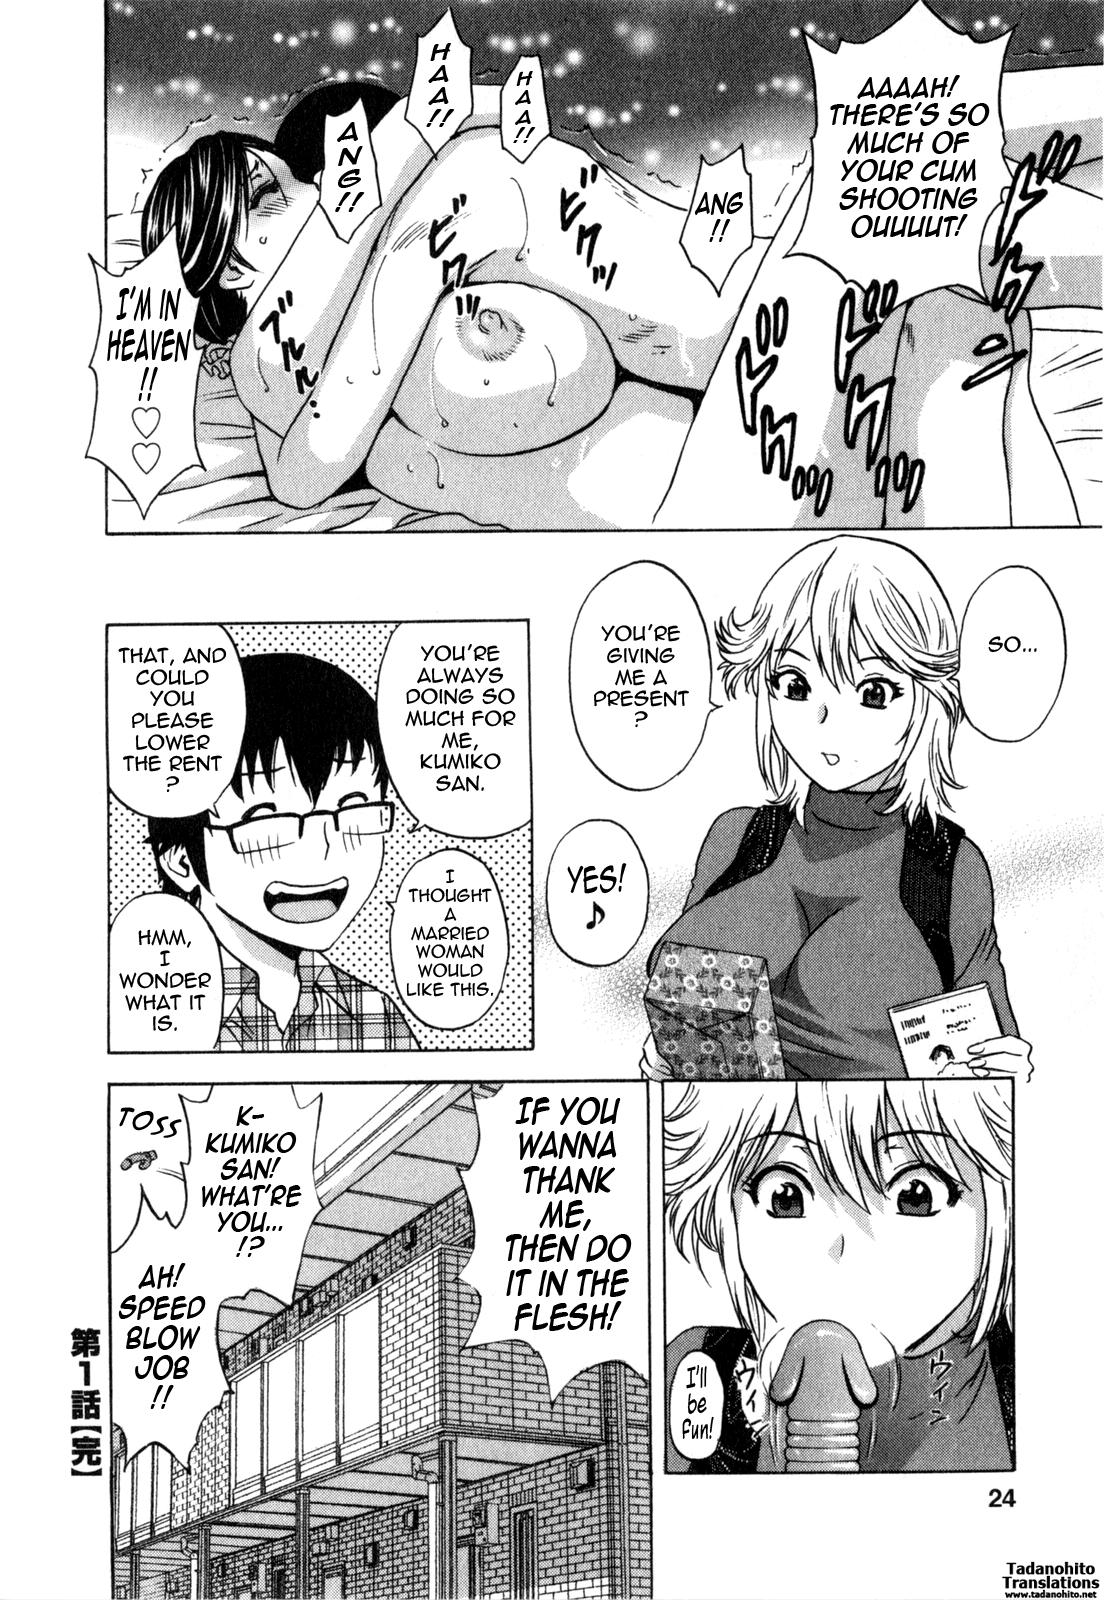 [Hidemaru] Life with Married Women Just Like a Manga 3 - Ch. 1-8 [English] {Tadanohito} 25